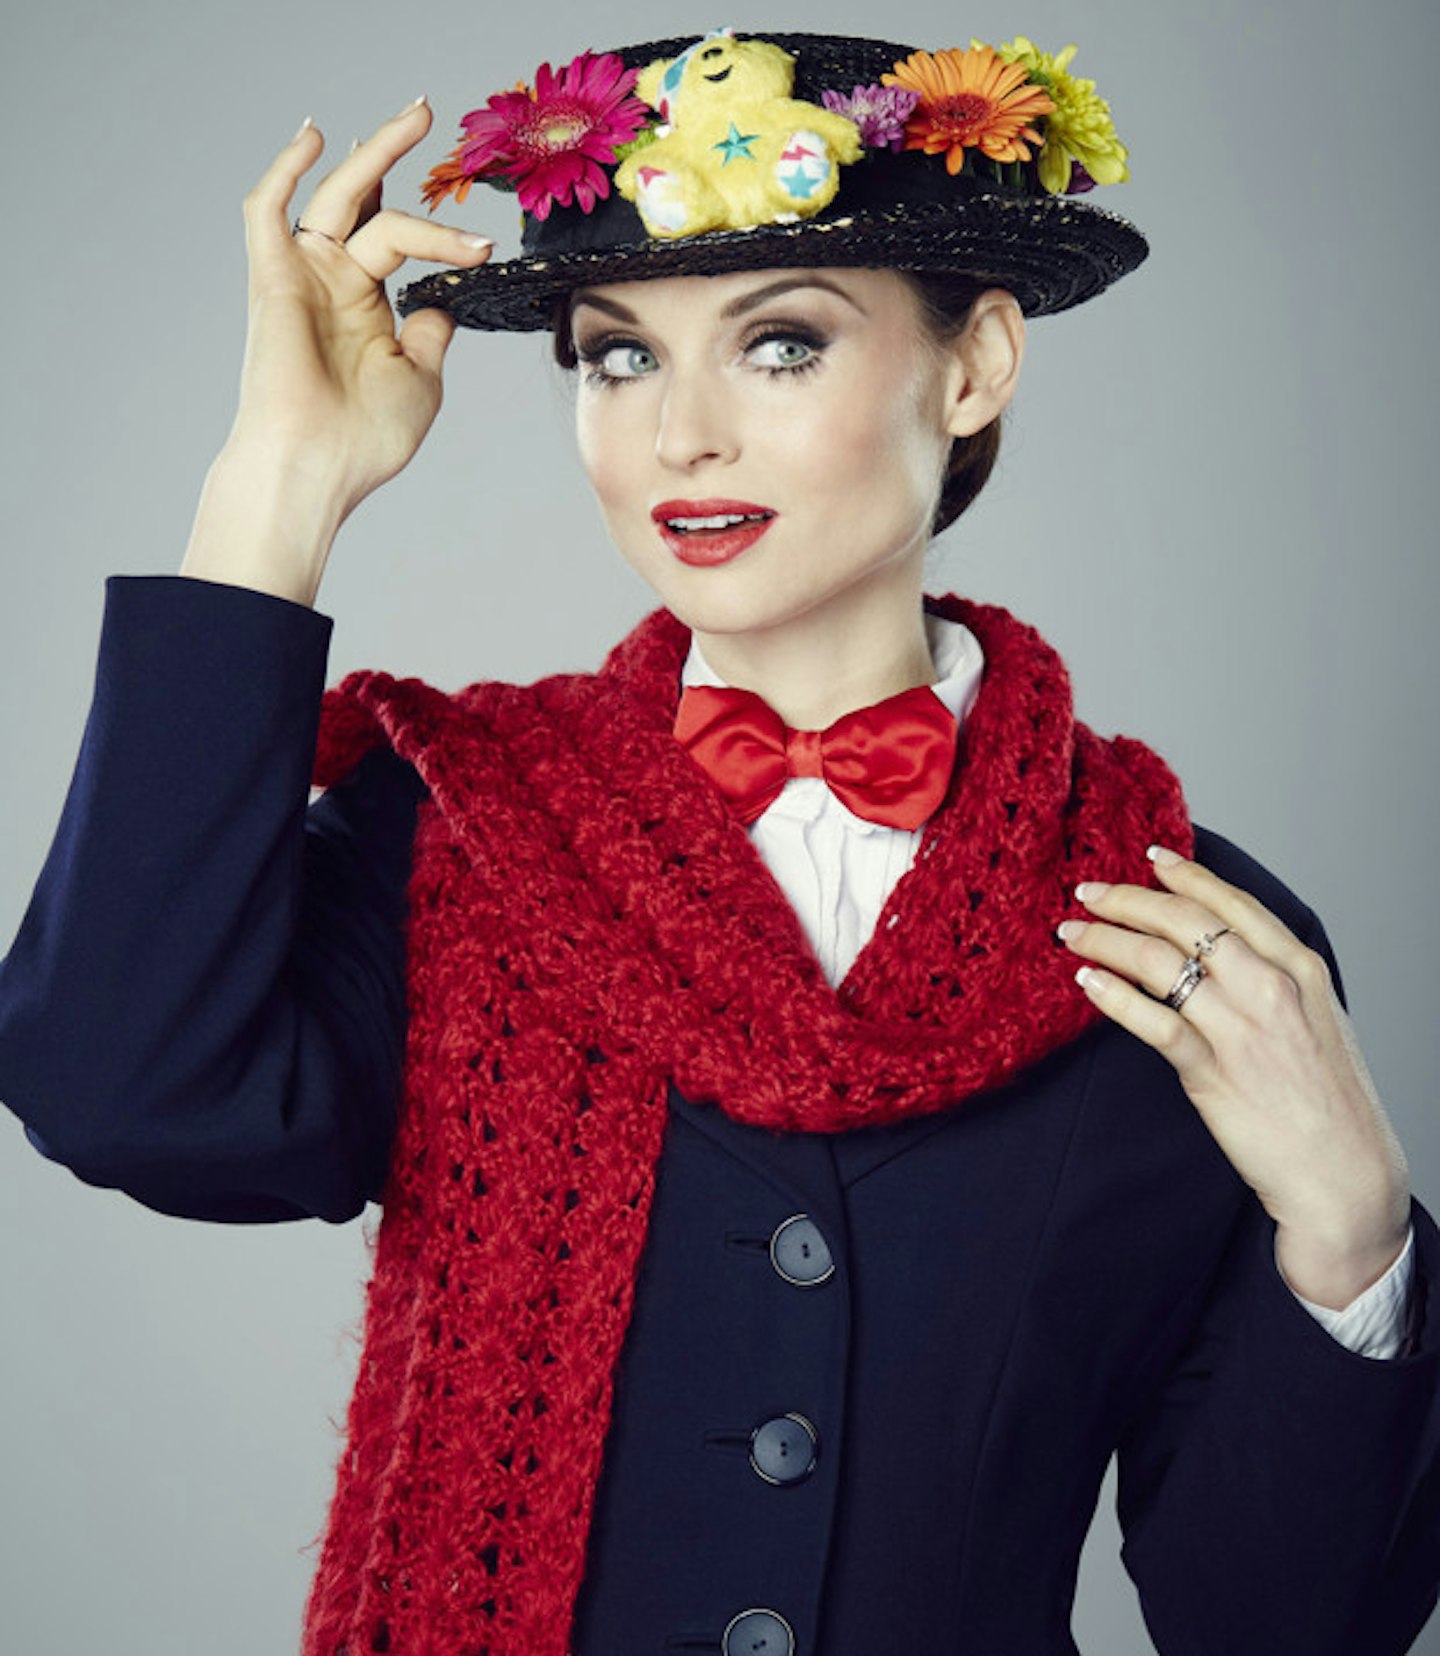 Sophie Ellis-Bextor as Mary Poppins